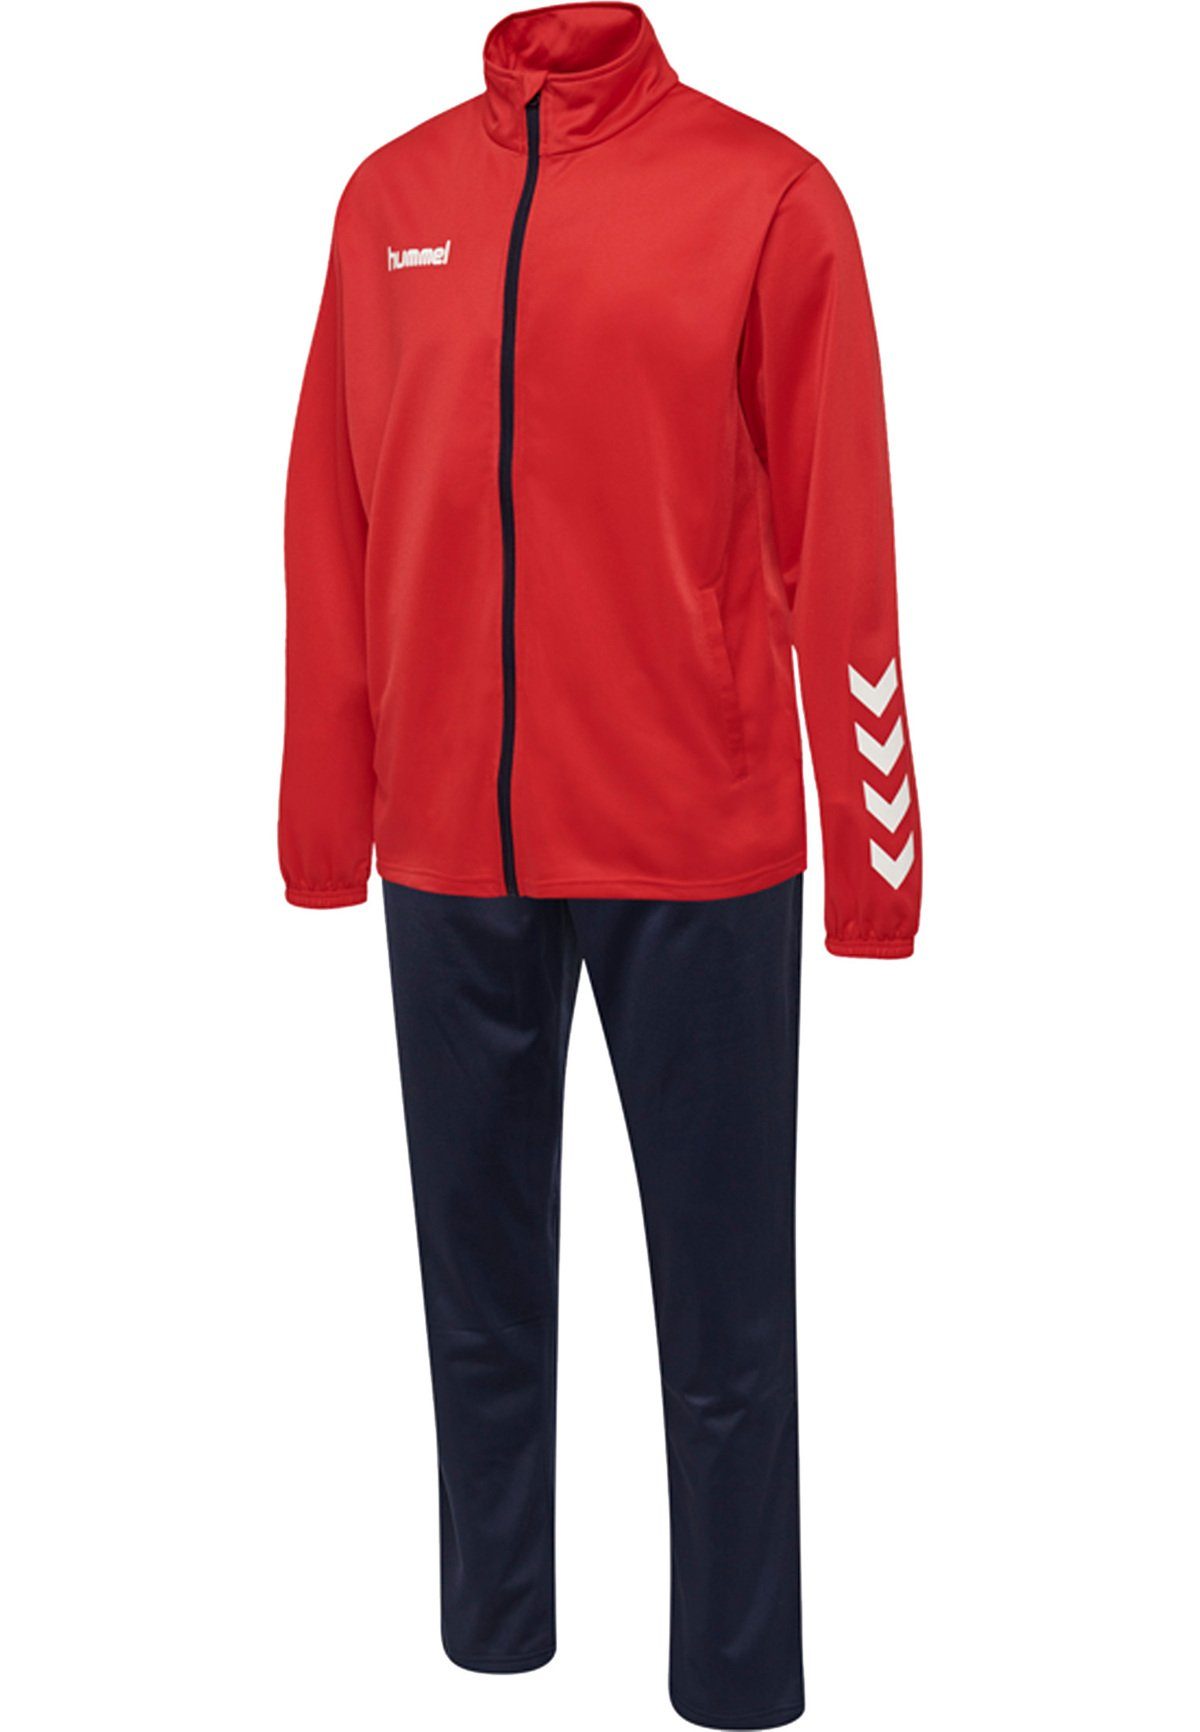 hummel Jogginganzug Unisex Kinder HMLPROMO Poly Suit Trainingsanzug TRUE RED/MARINE